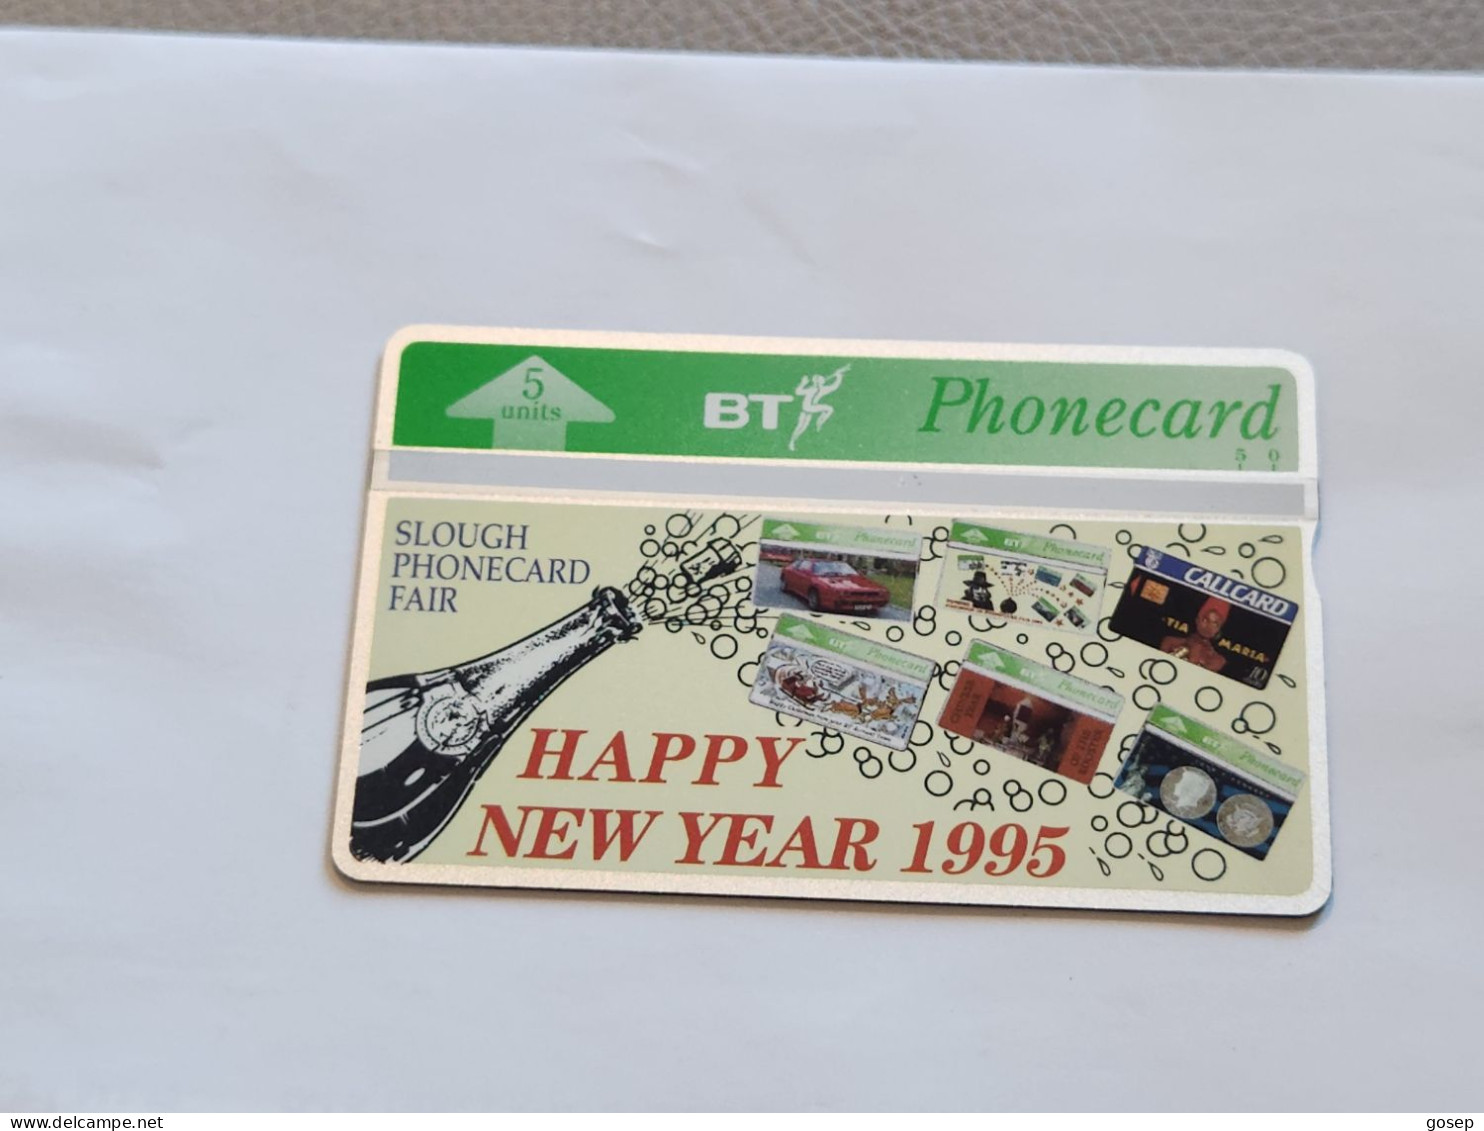 United Kingdom-(BTG-444)-Slough Phonecard Fair-(382)(5units)(405L50999)(tirage-500)-price Cataloge-10.00£-mint - BT General Issues